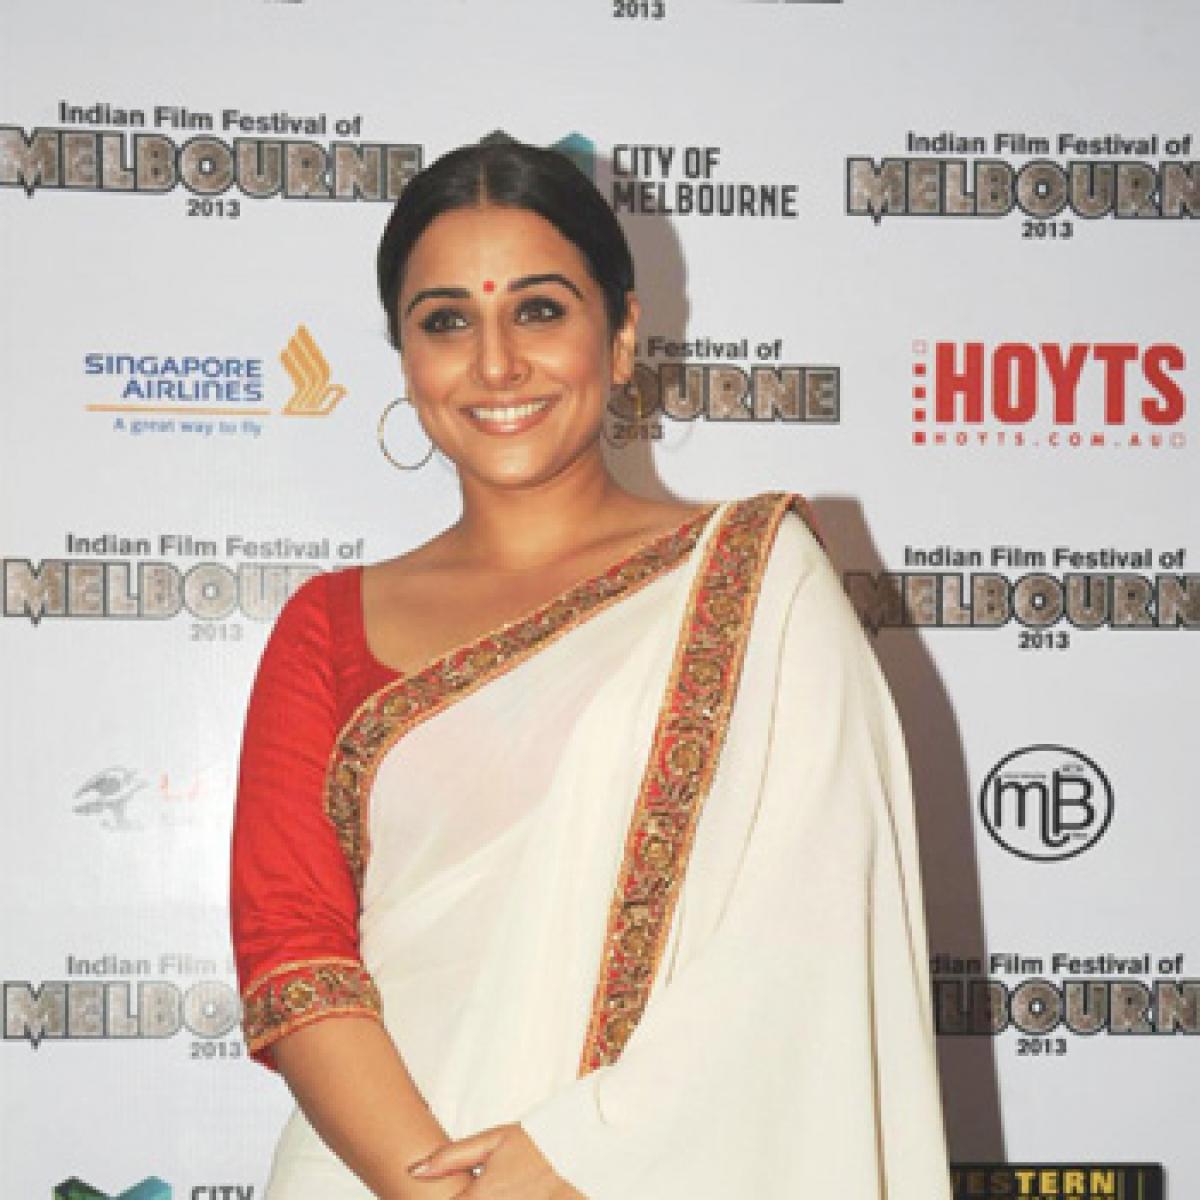 Wear saris beyond special occasions, urges Vidya Balan